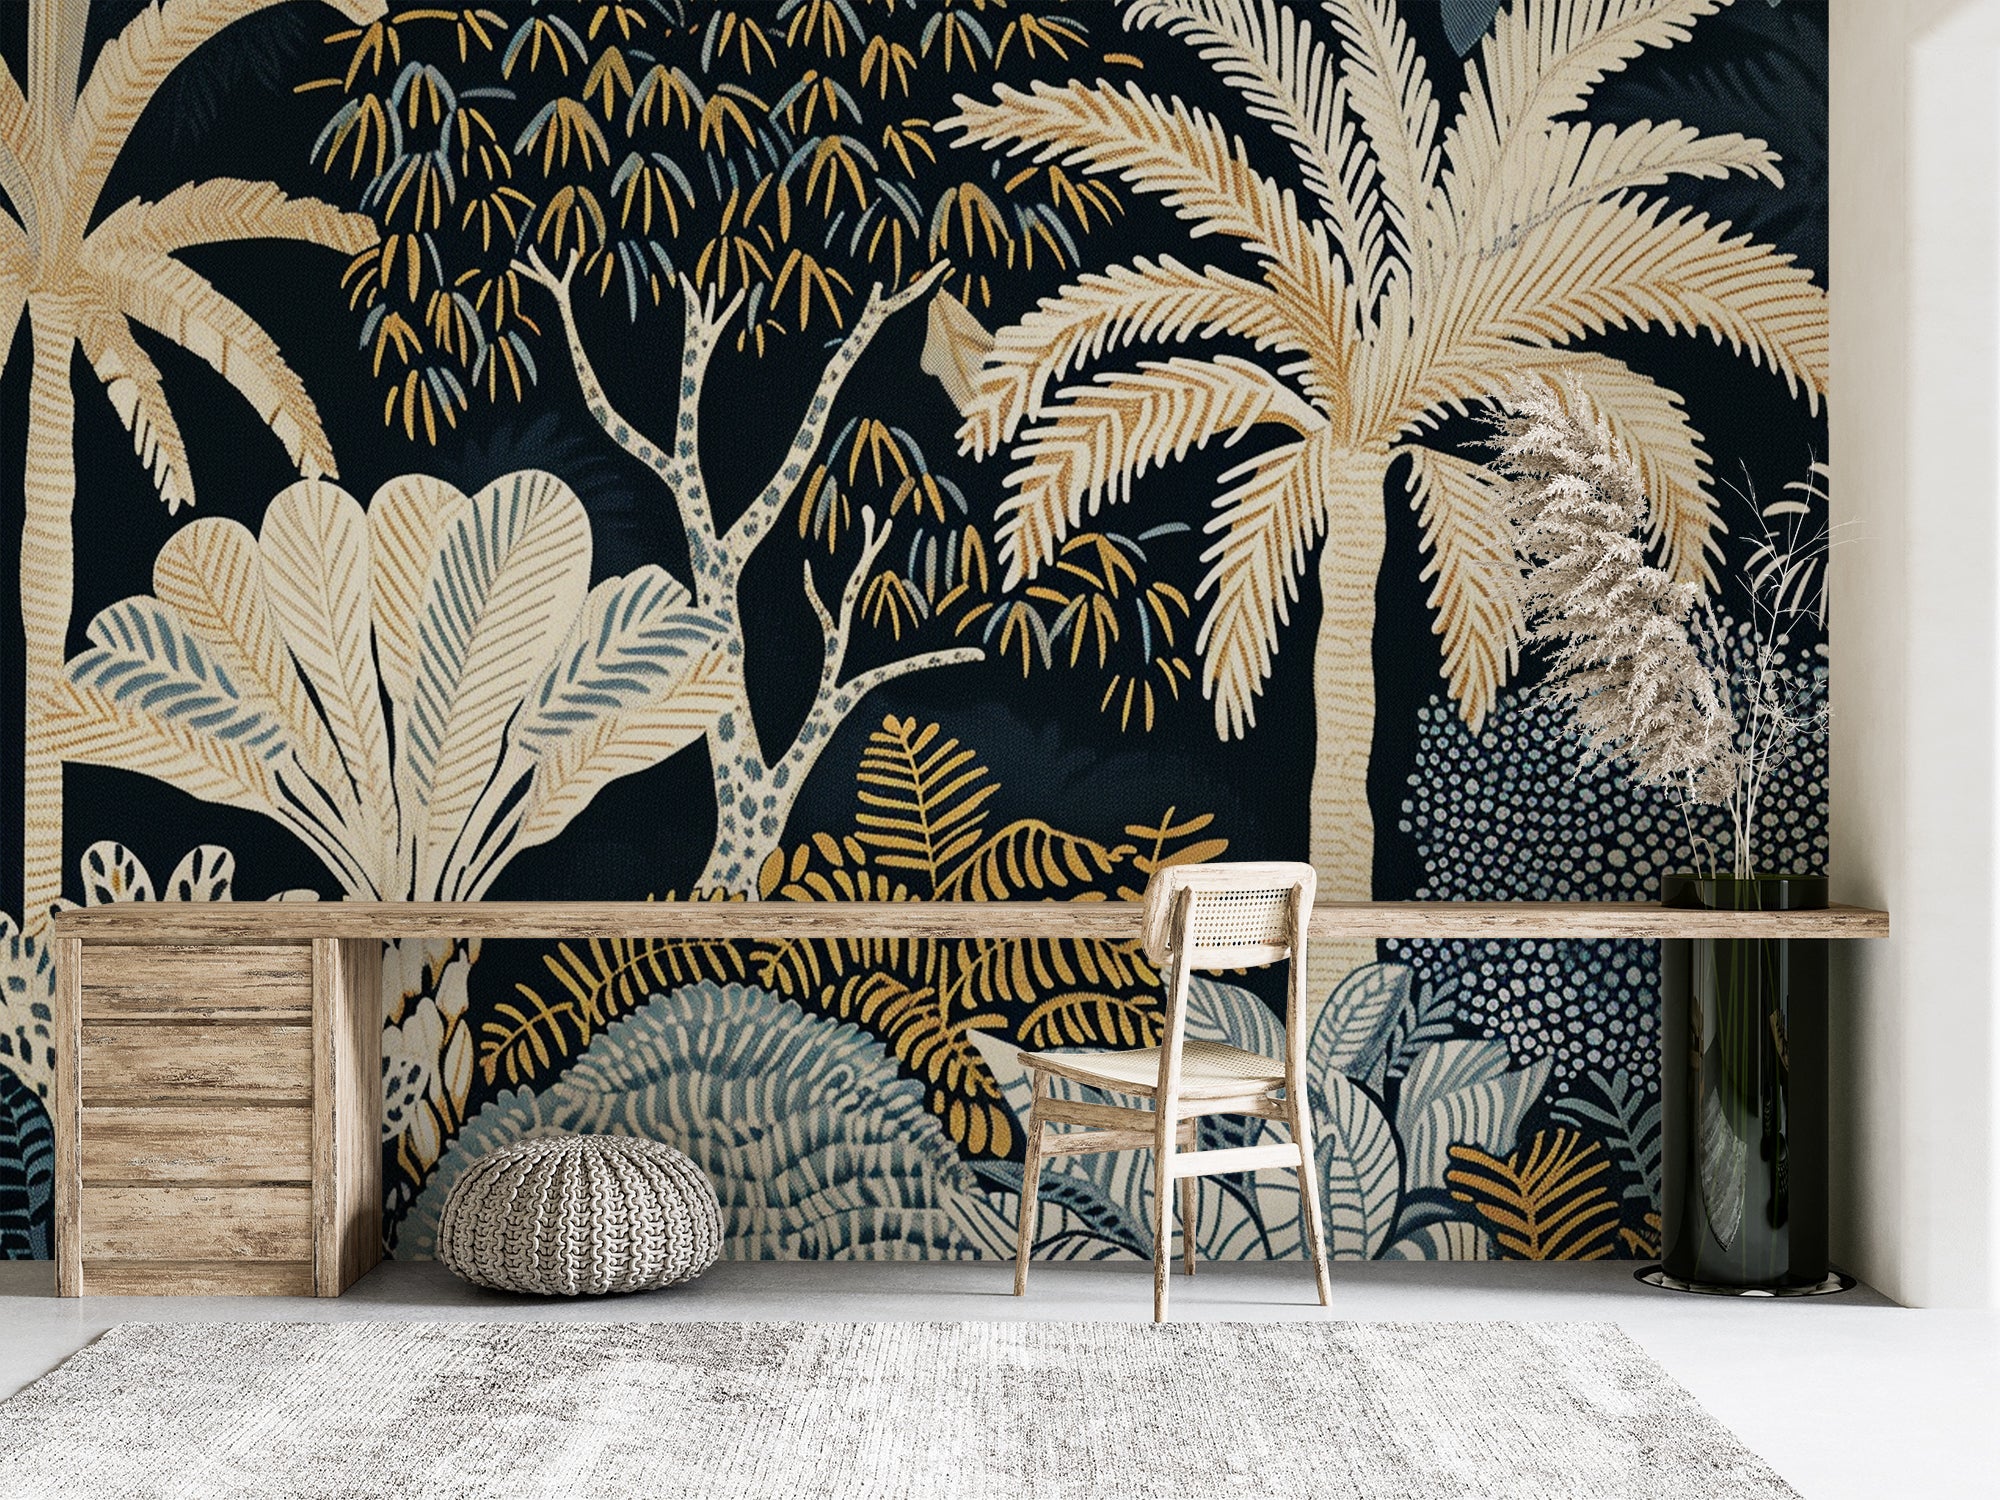 Éclat Tropical – Luxuriance Murale en Grand Format